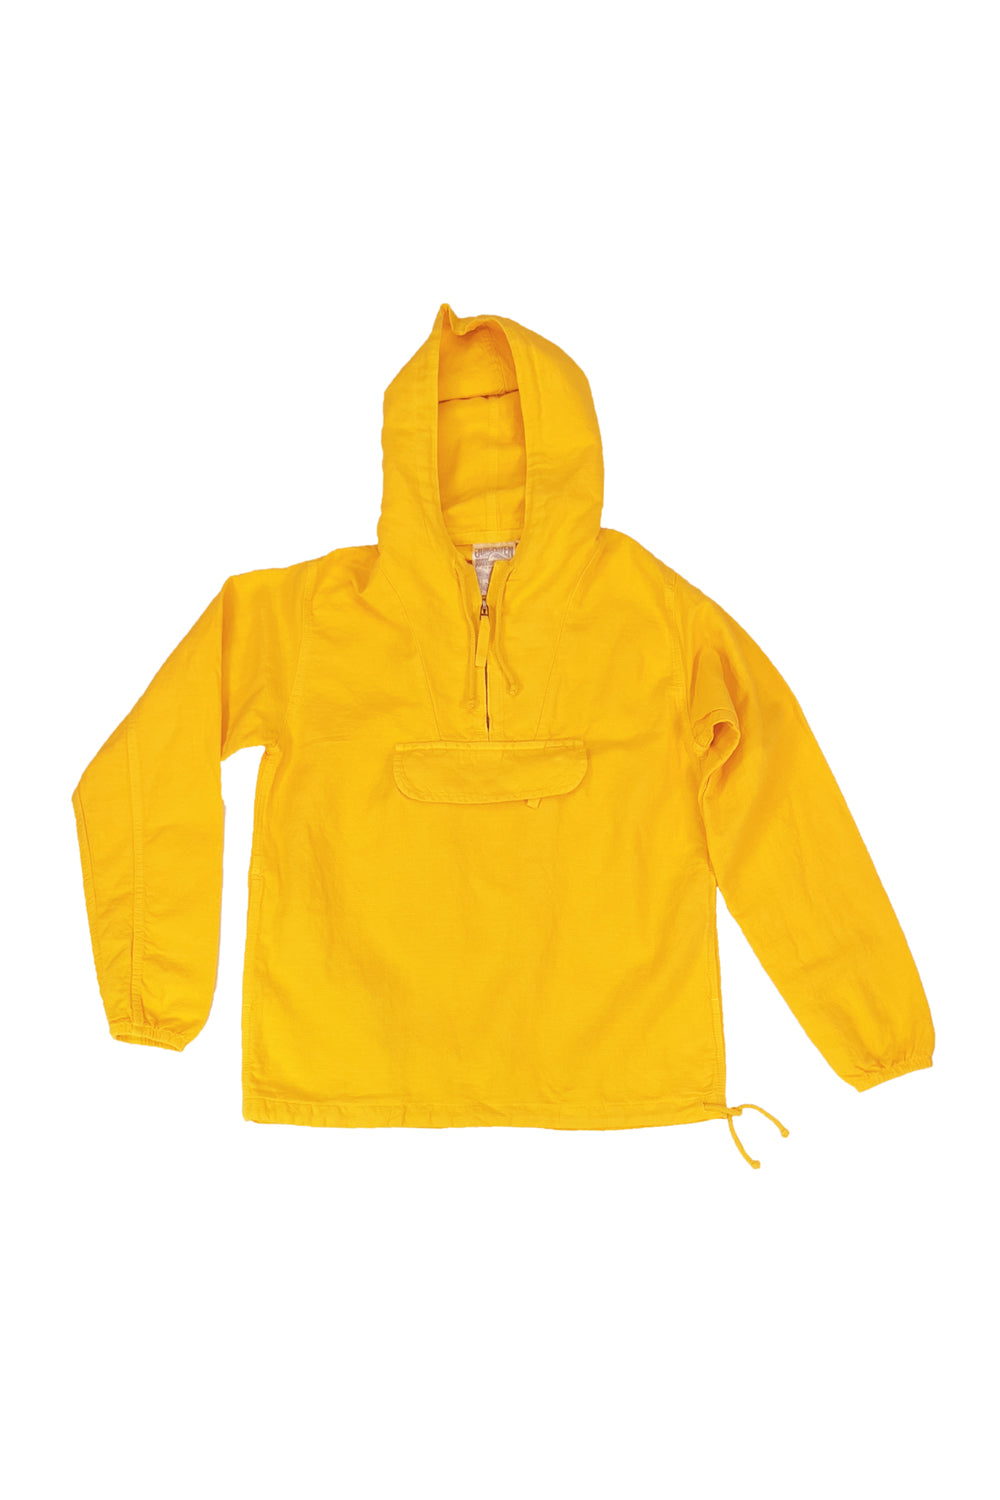 Shoreline Anorak Jacket | Jungmaven Hemp Clothing & Accessories / Color: Sunshine Yellow